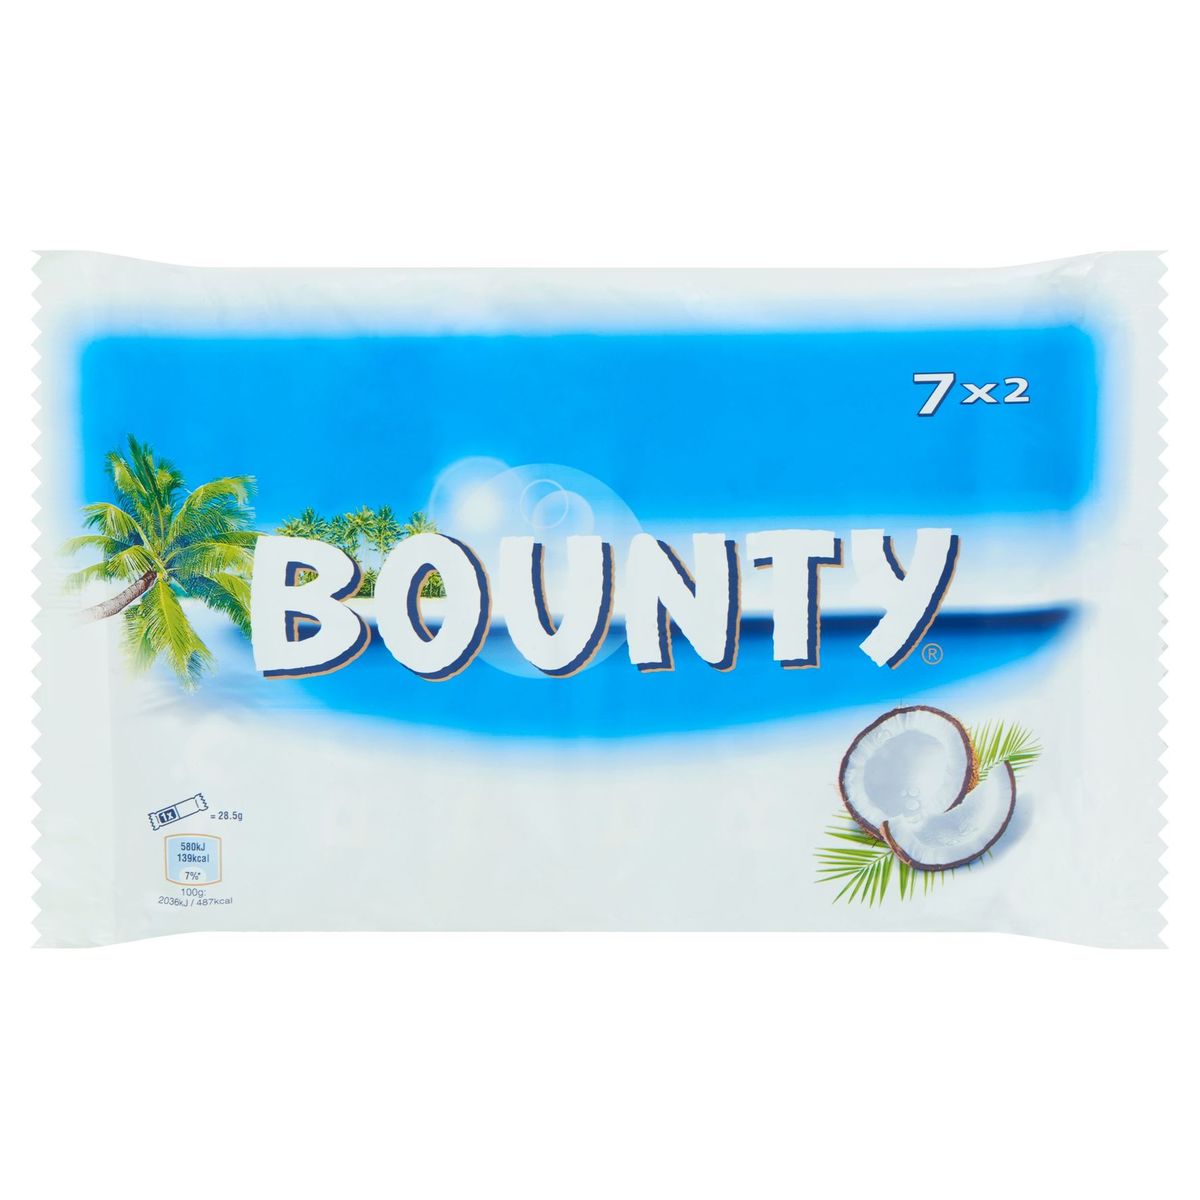 Bounty Barres de Chocolat 7 x 2 x 28.5 g